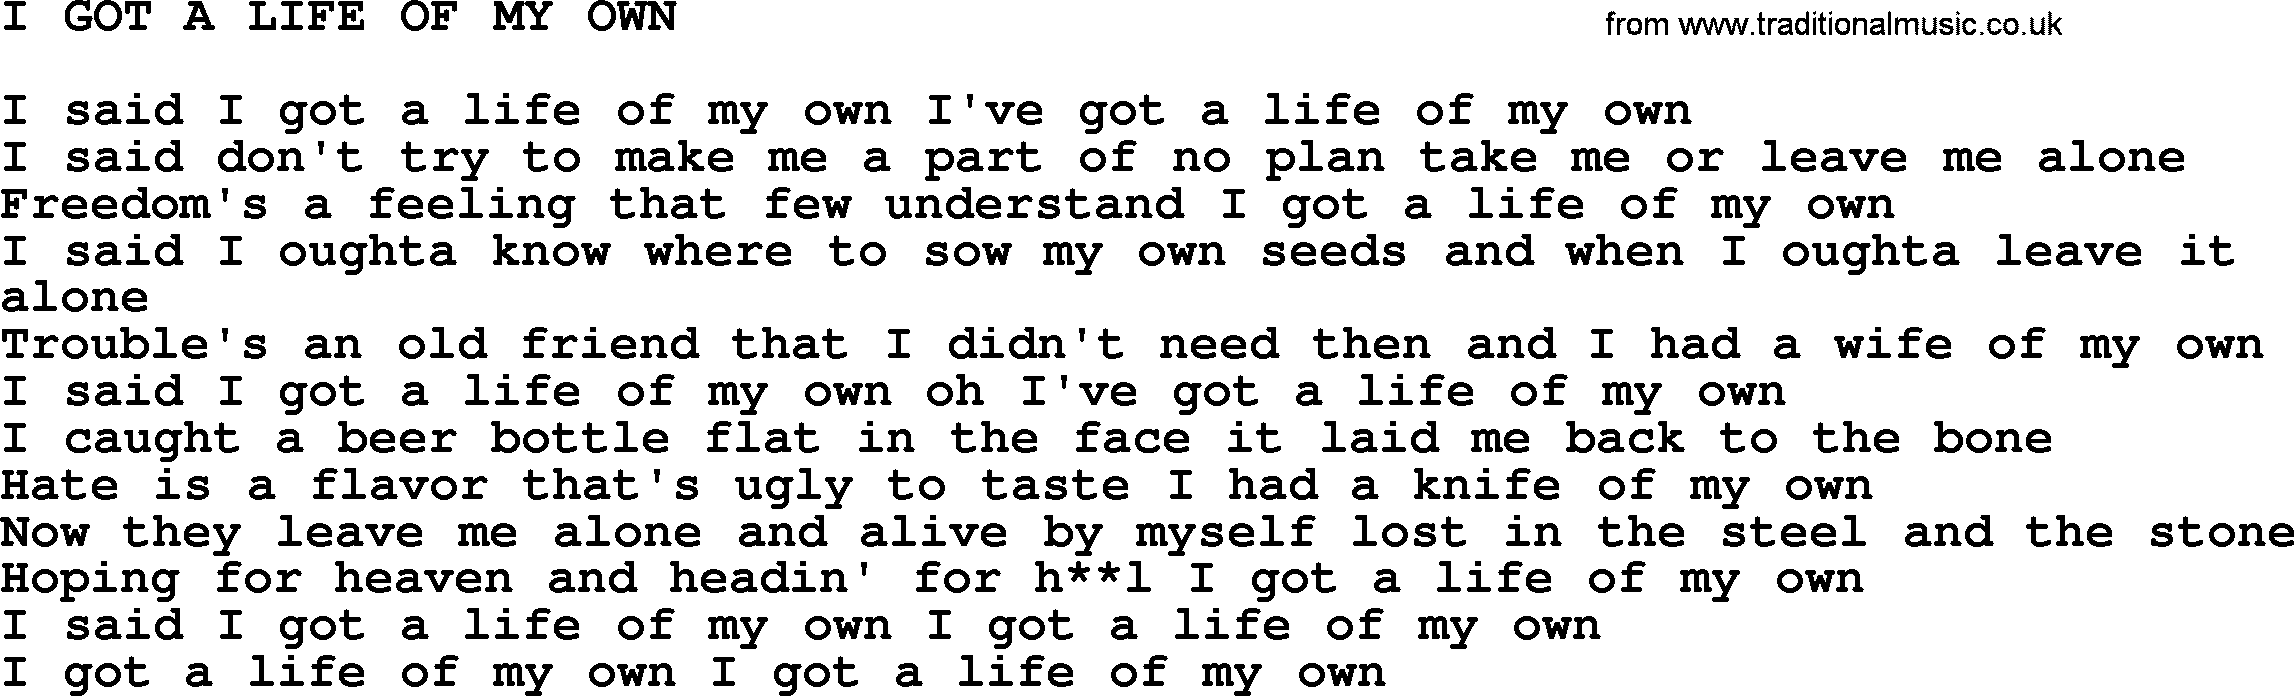 Kris Kristofferson song: I Got A Life Of My Own lyrics